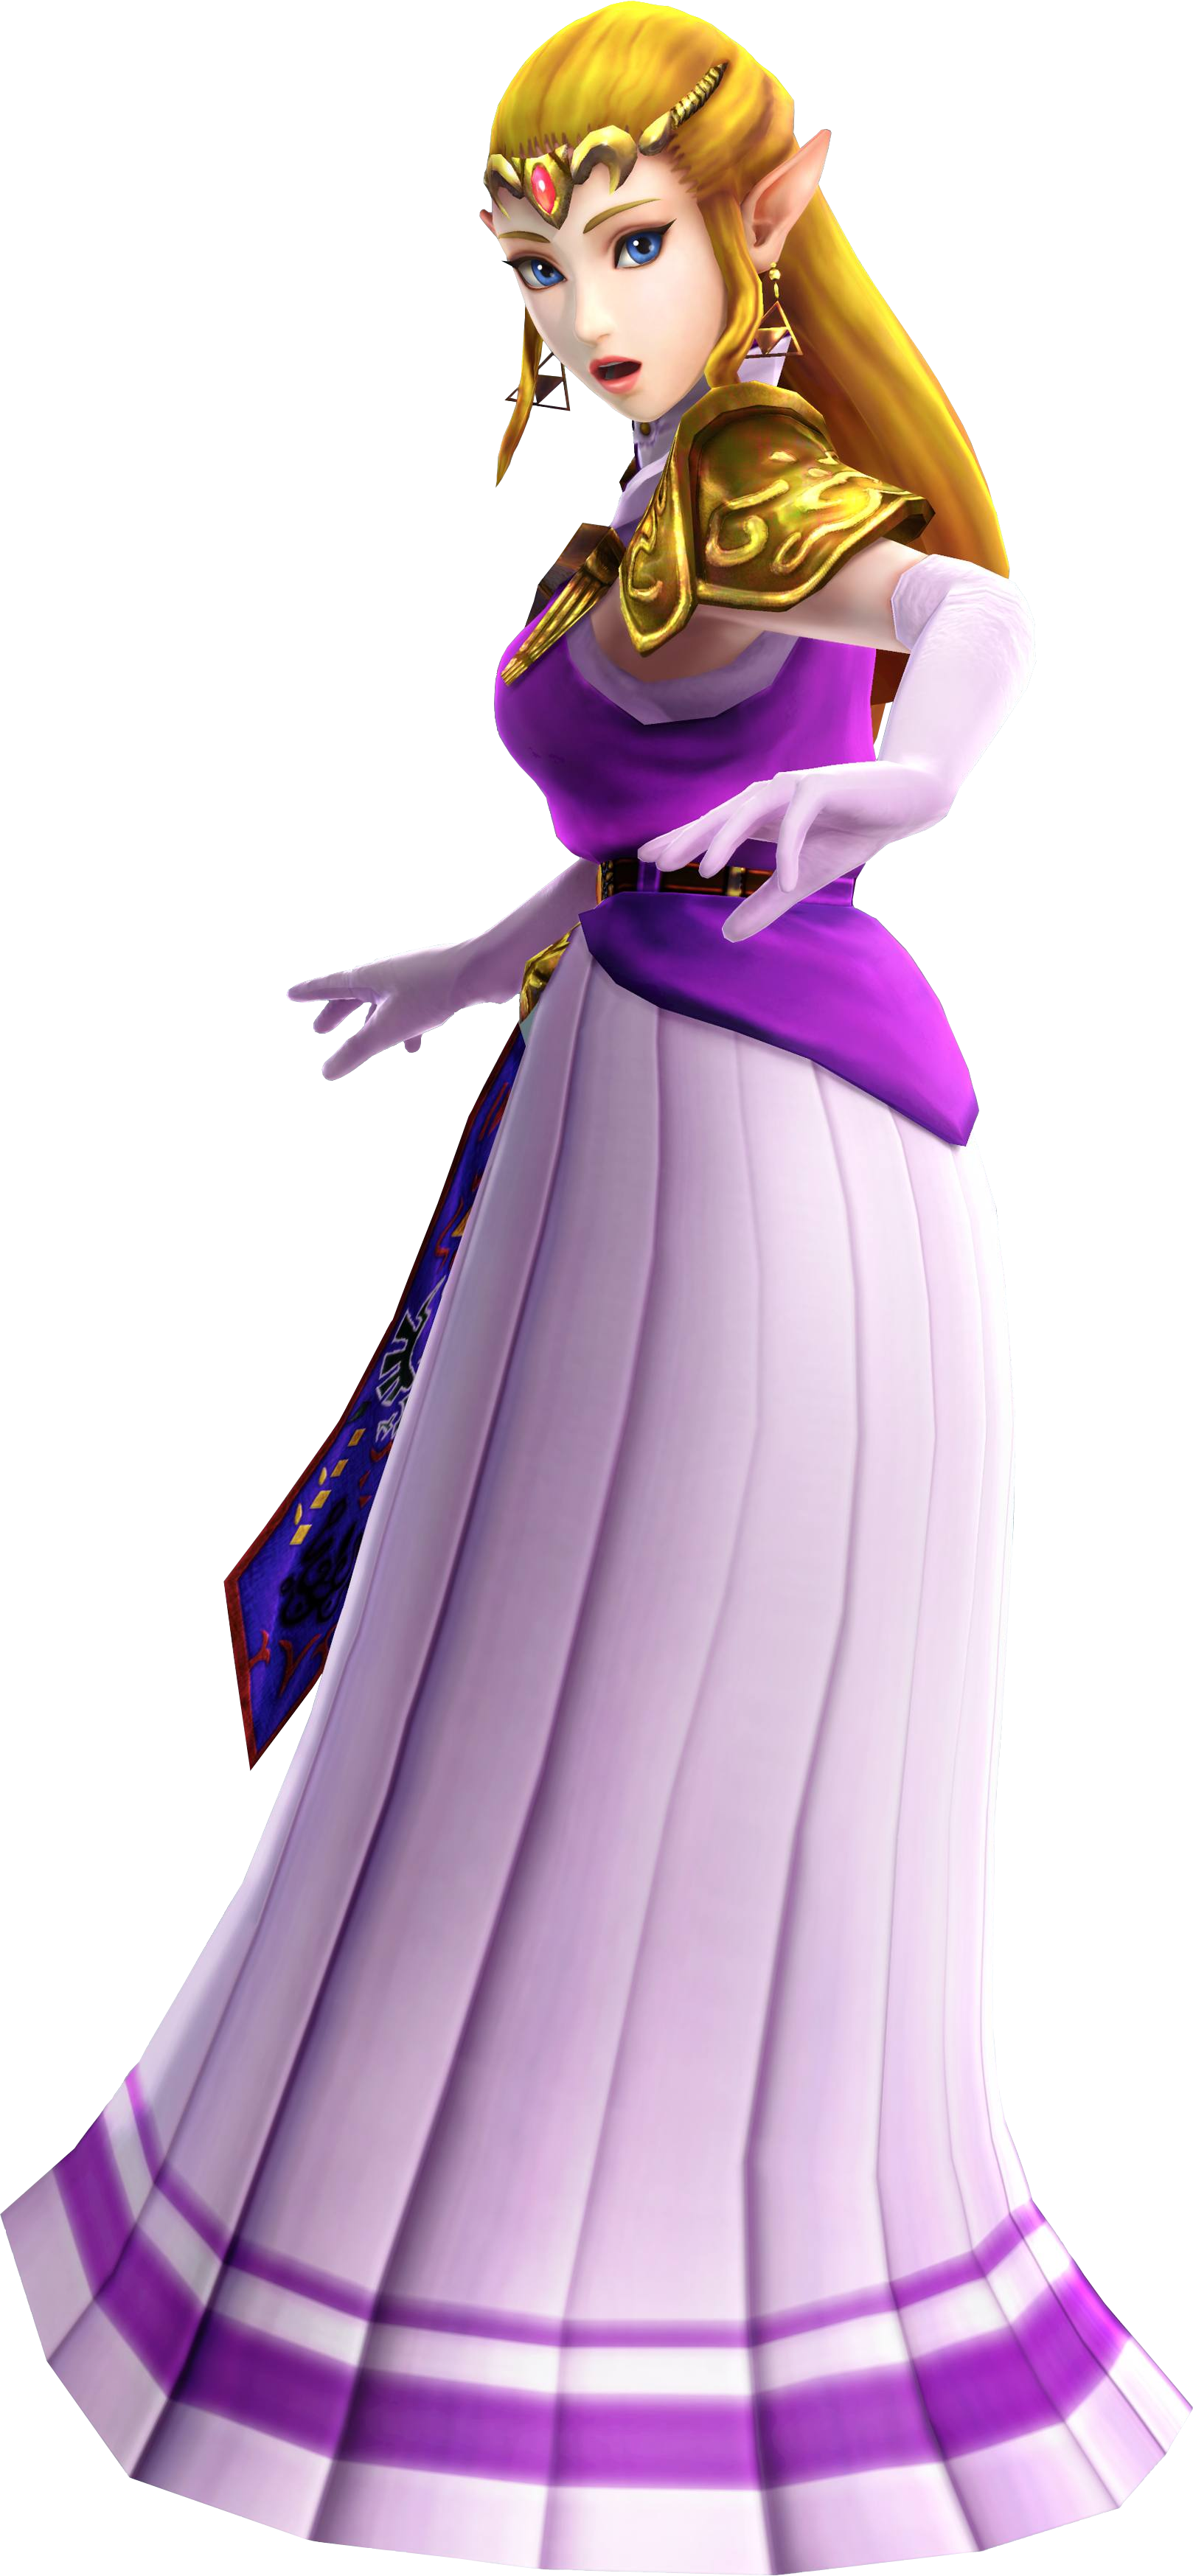 Ocarina of Time Princess Zelda Dress from Think Geek - Zelda Dungeon